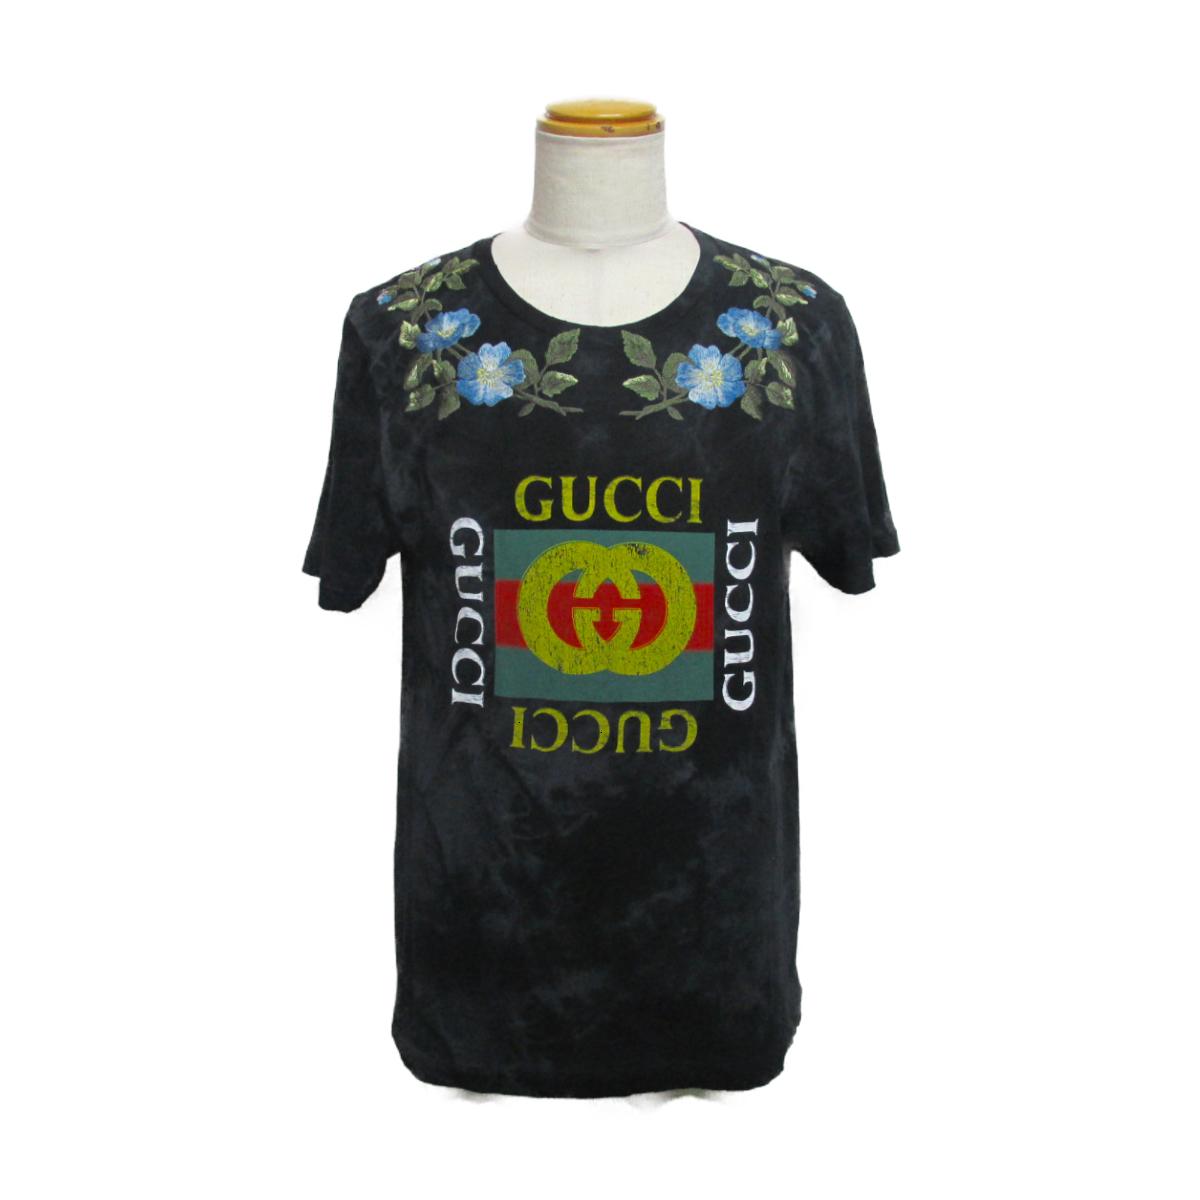 off brand gucci shirt, OFF 70%,www 